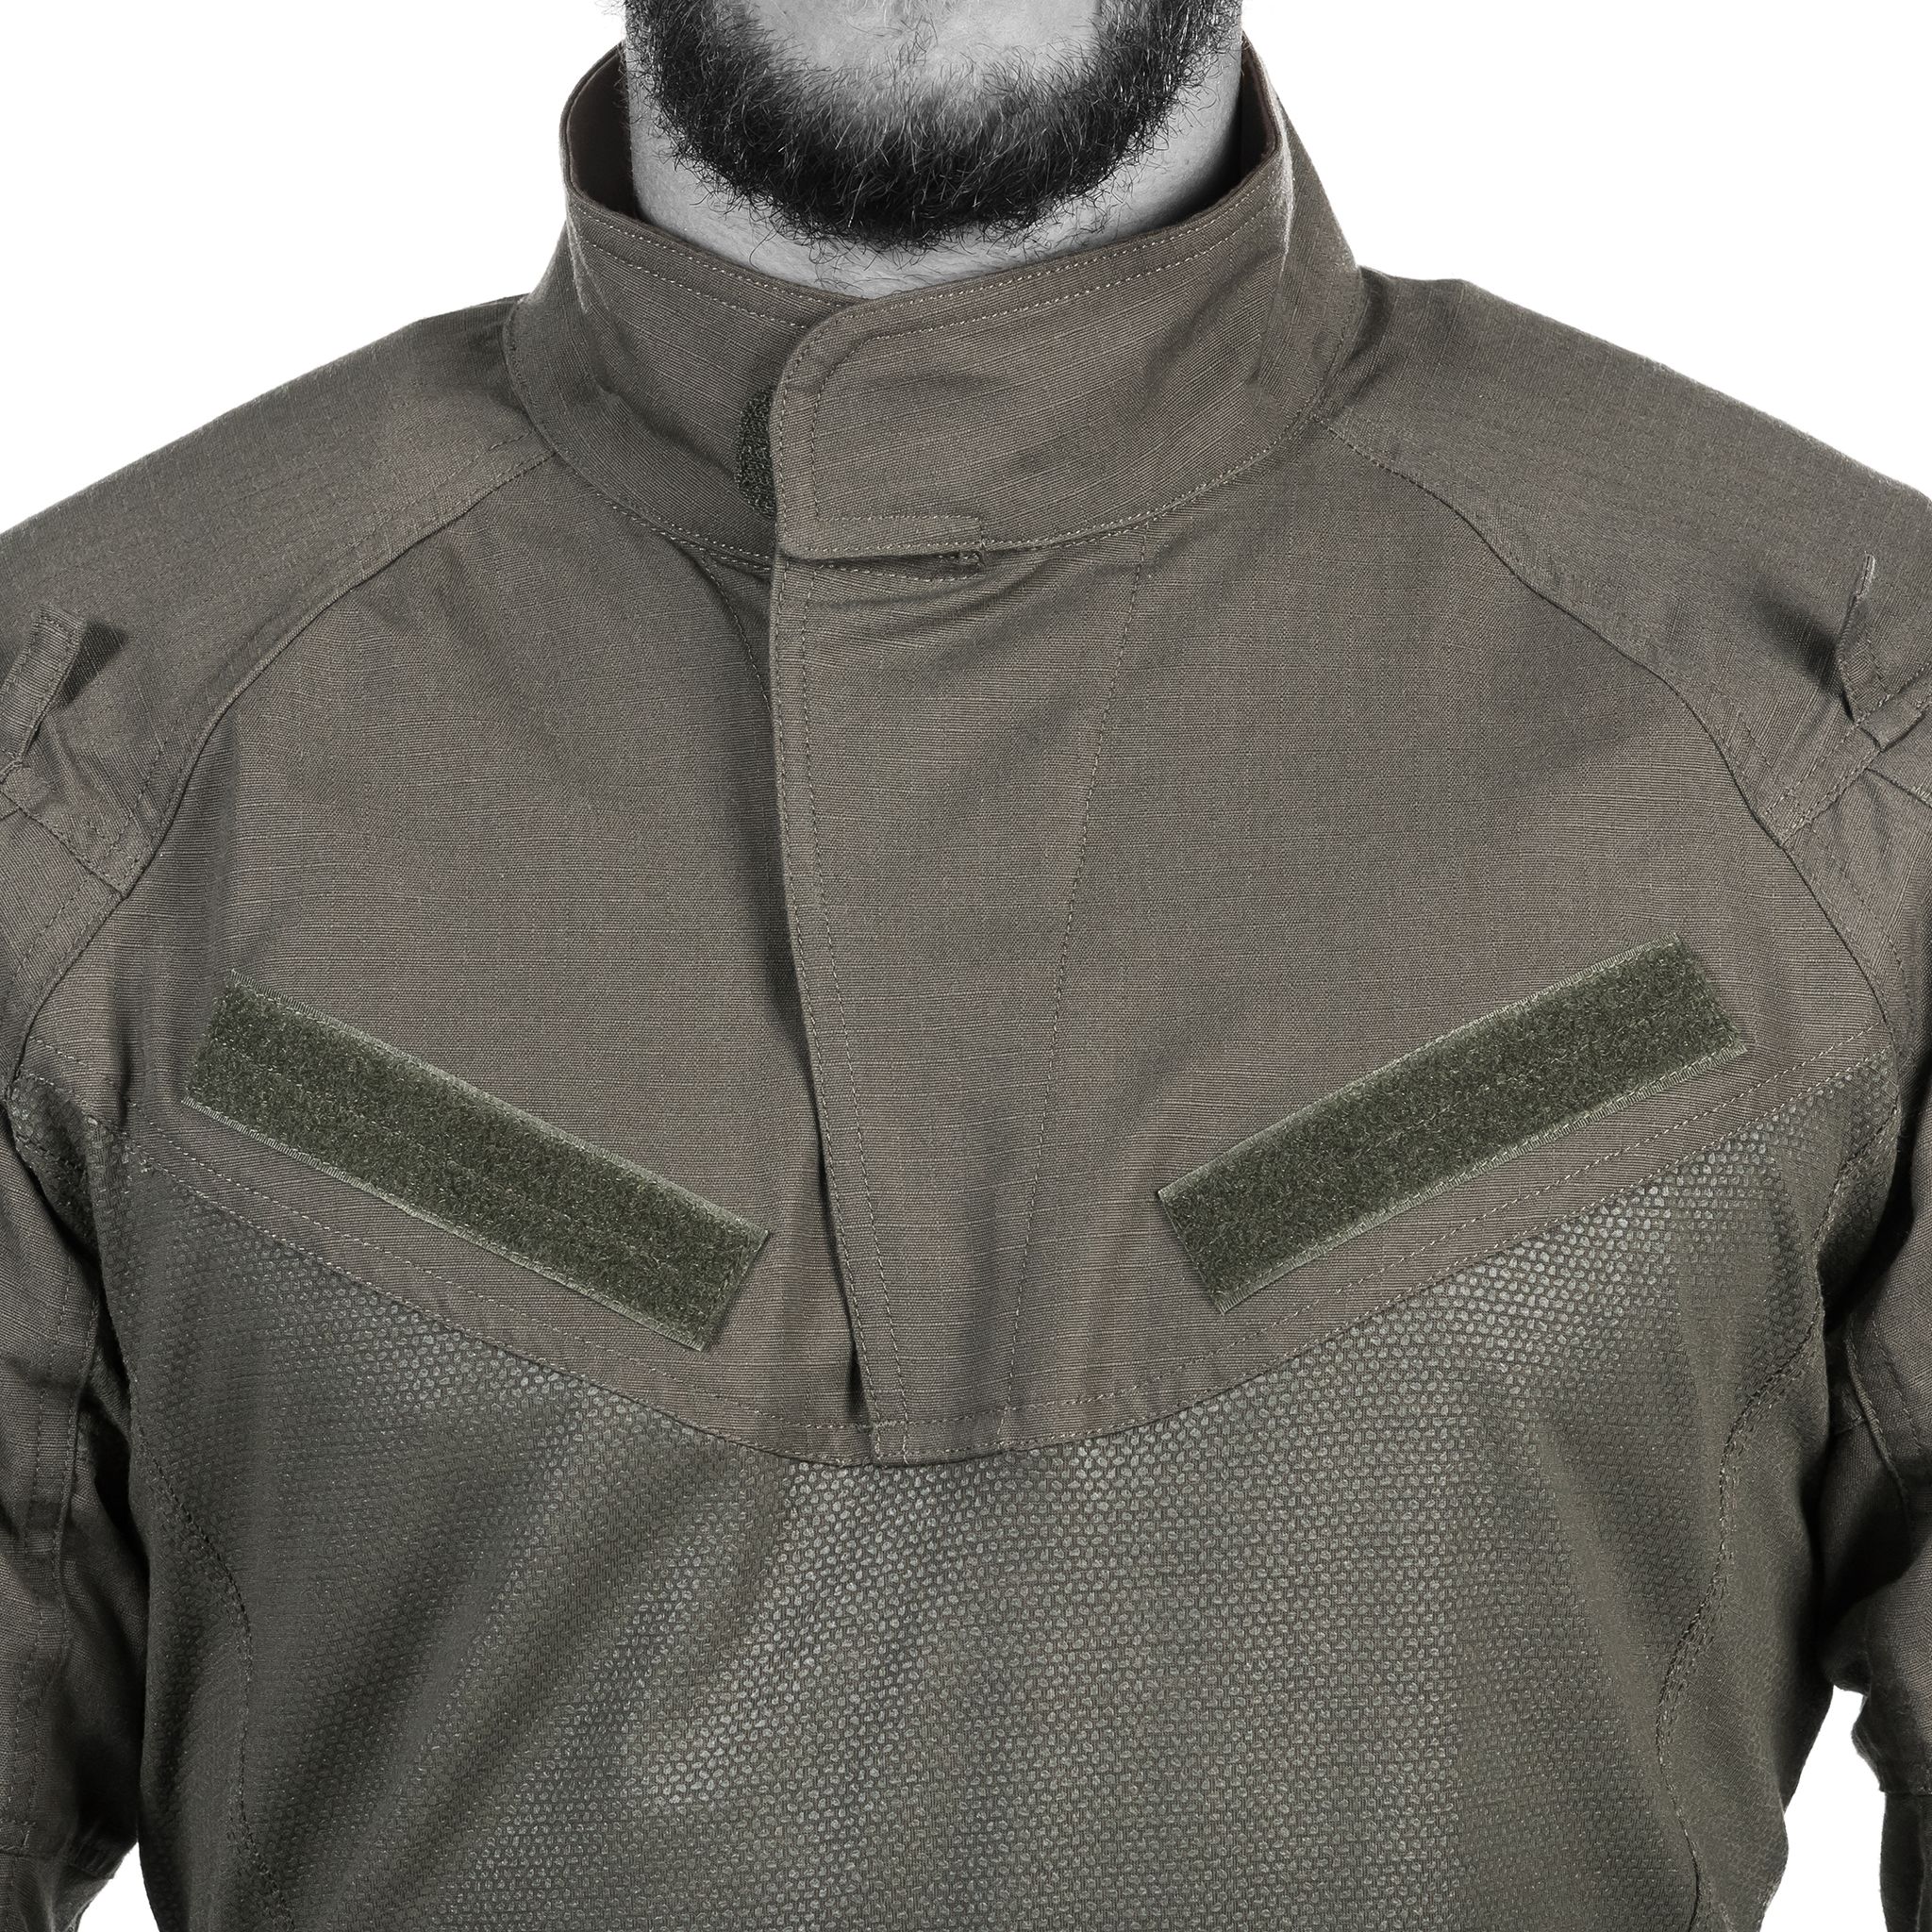 UF PRO - Striker X Combat Shirt - Brown Grey